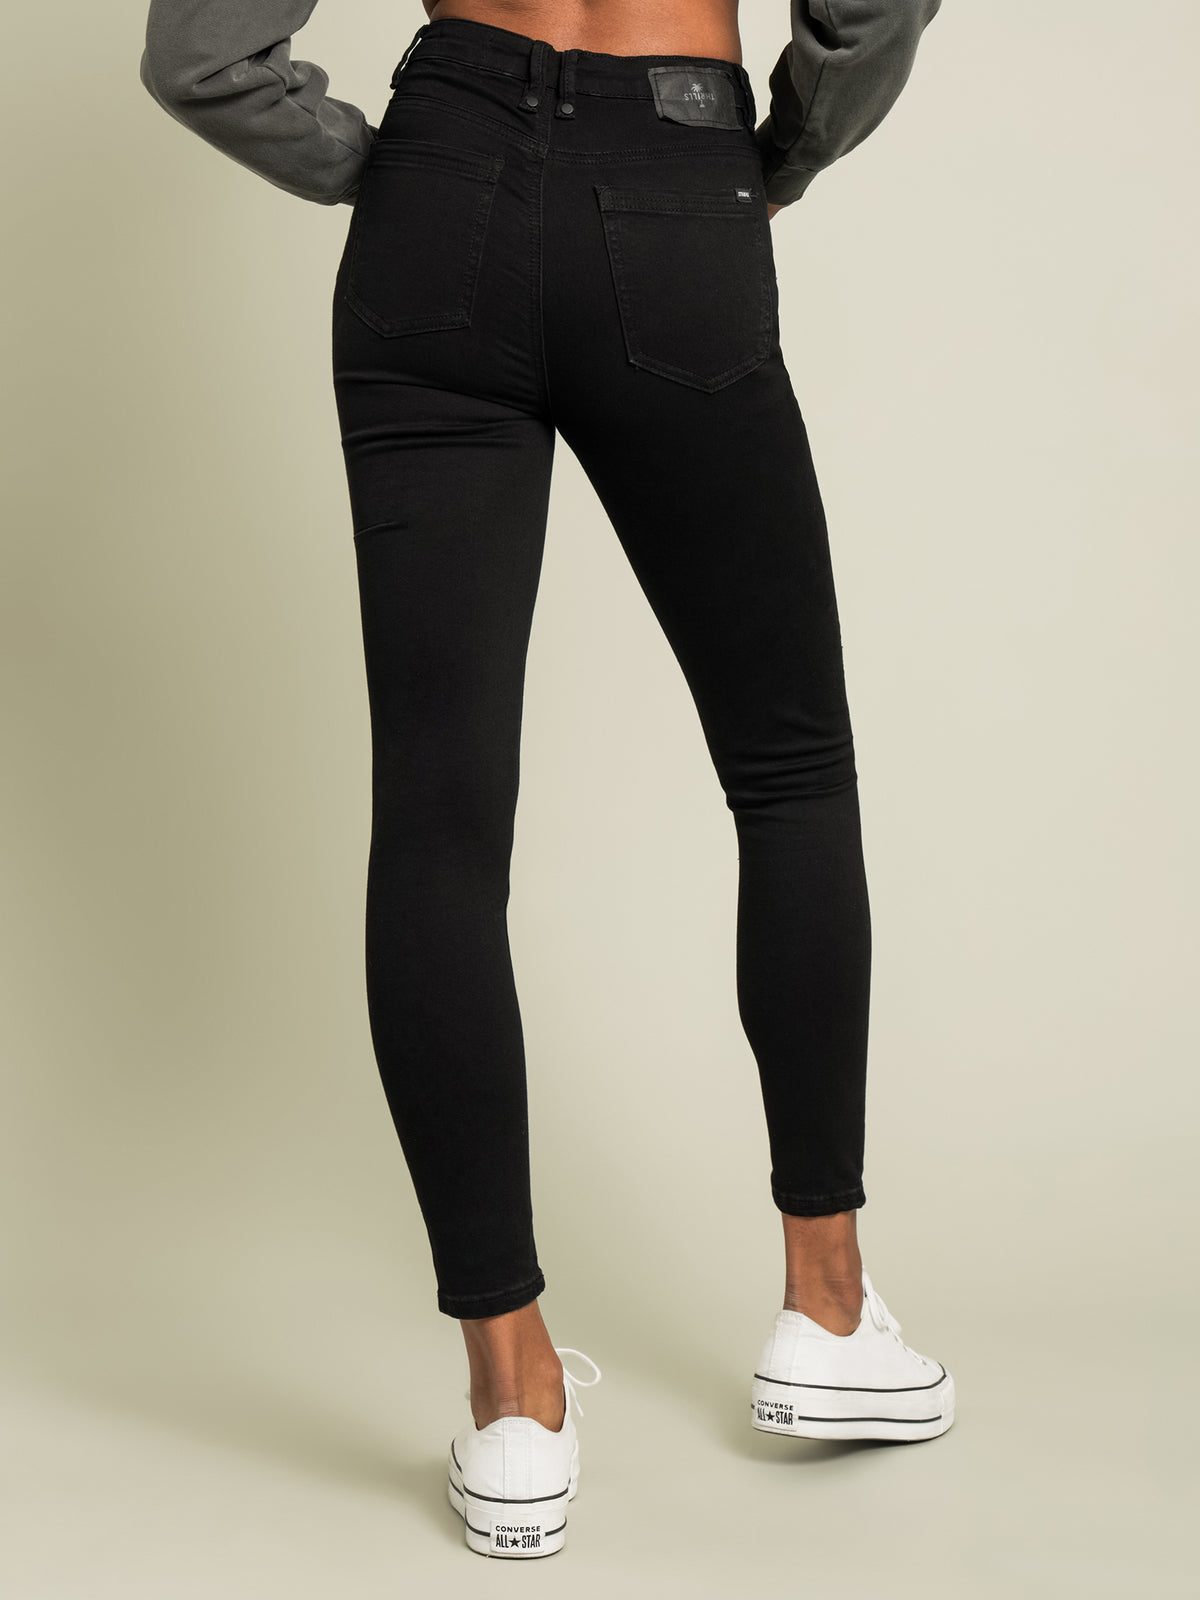 Elise Stretch Skinny Jeans in Black